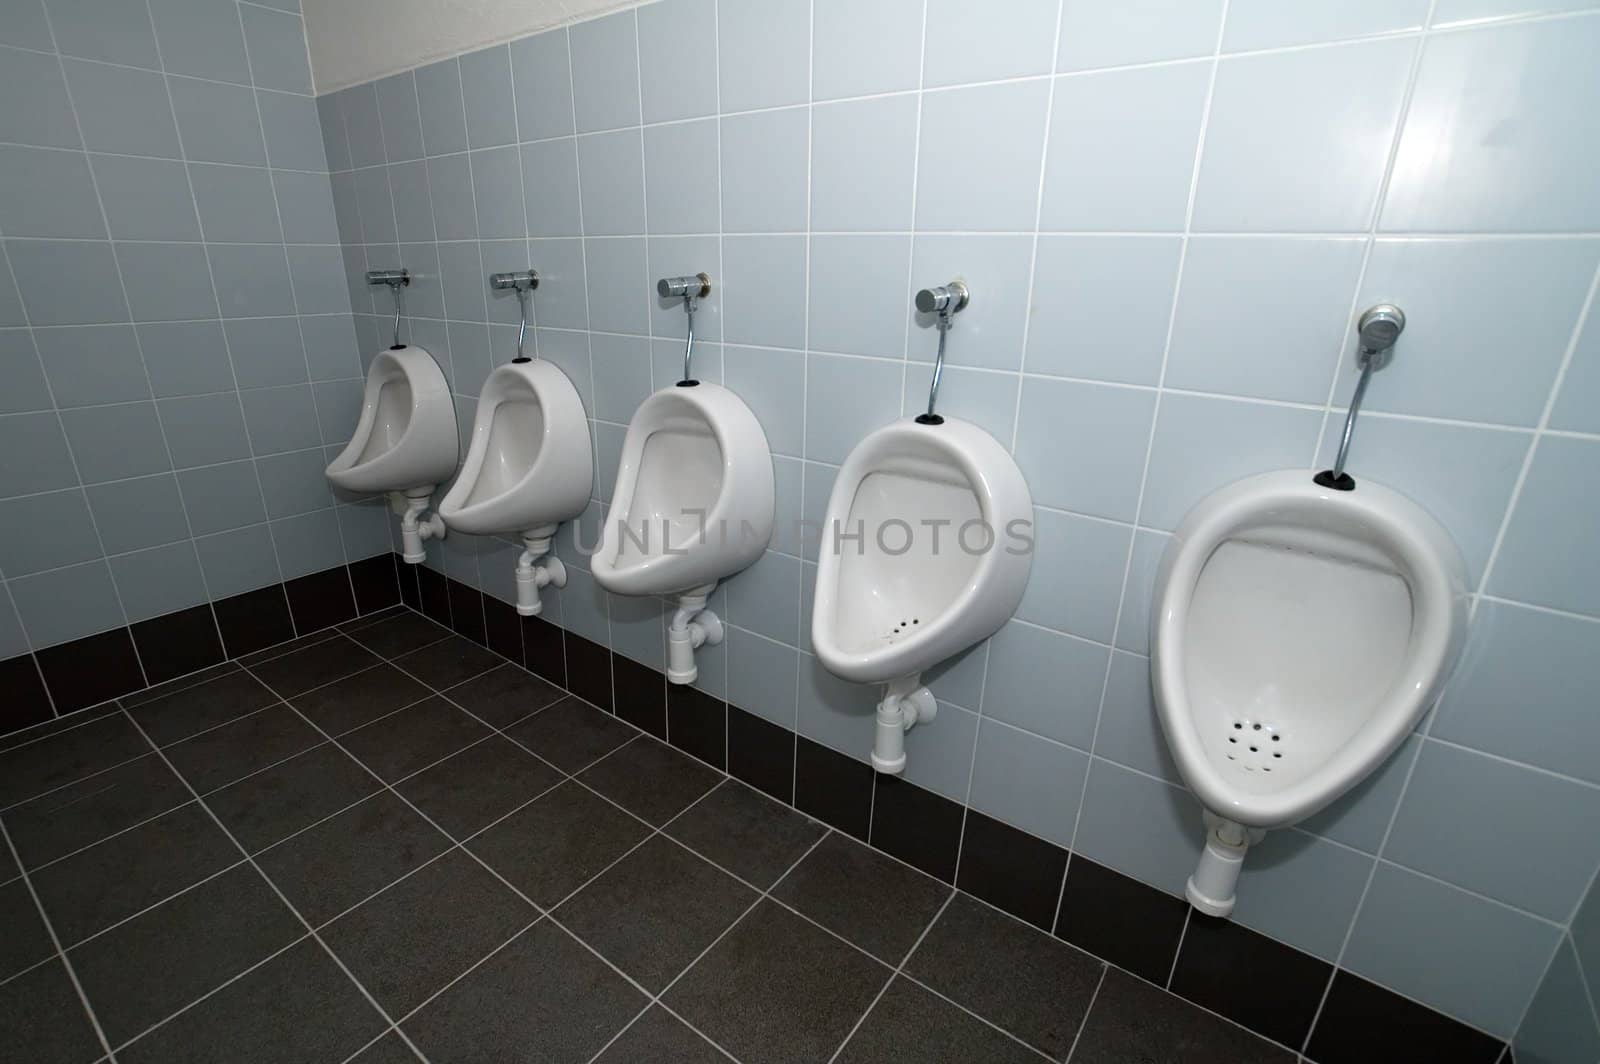 four pissoirs in titled public bathroom